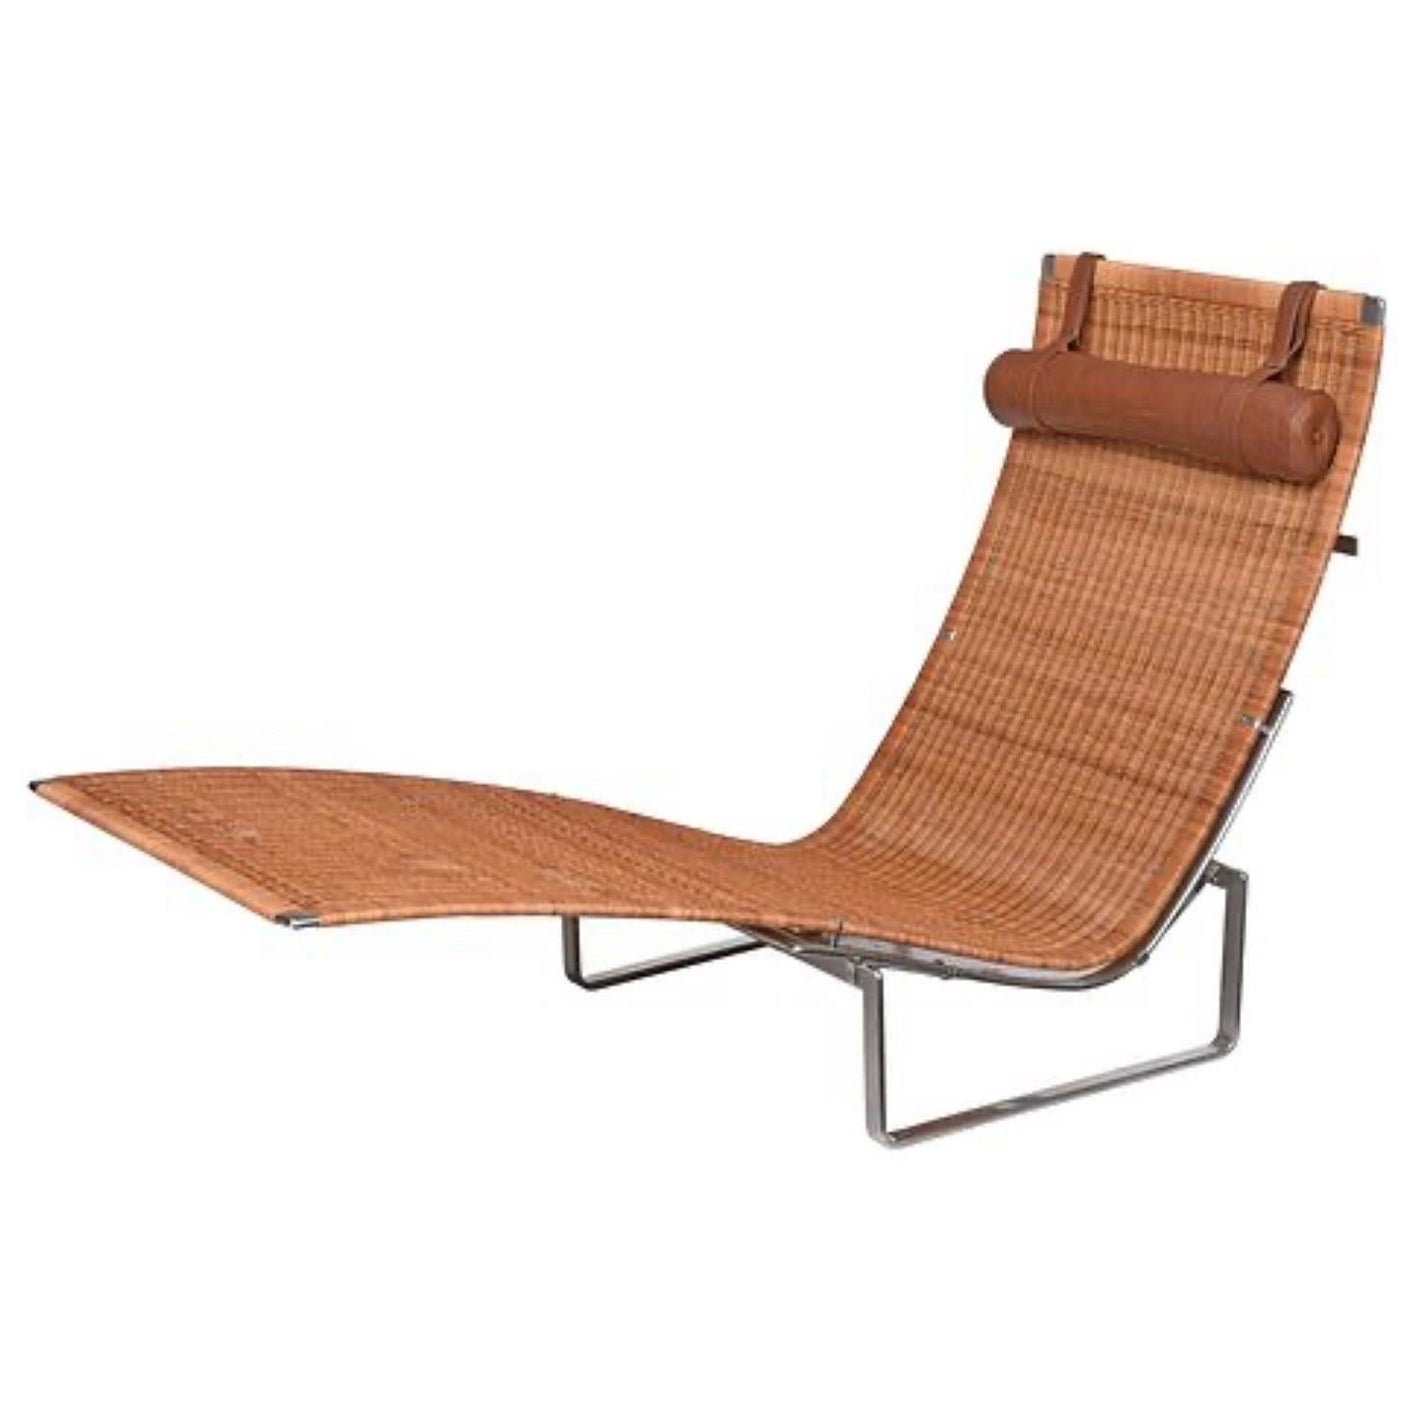 Poul Kjaerholm for Fritz Hansen "PK24" Wicker and Chrome Lounge Chair For Sale